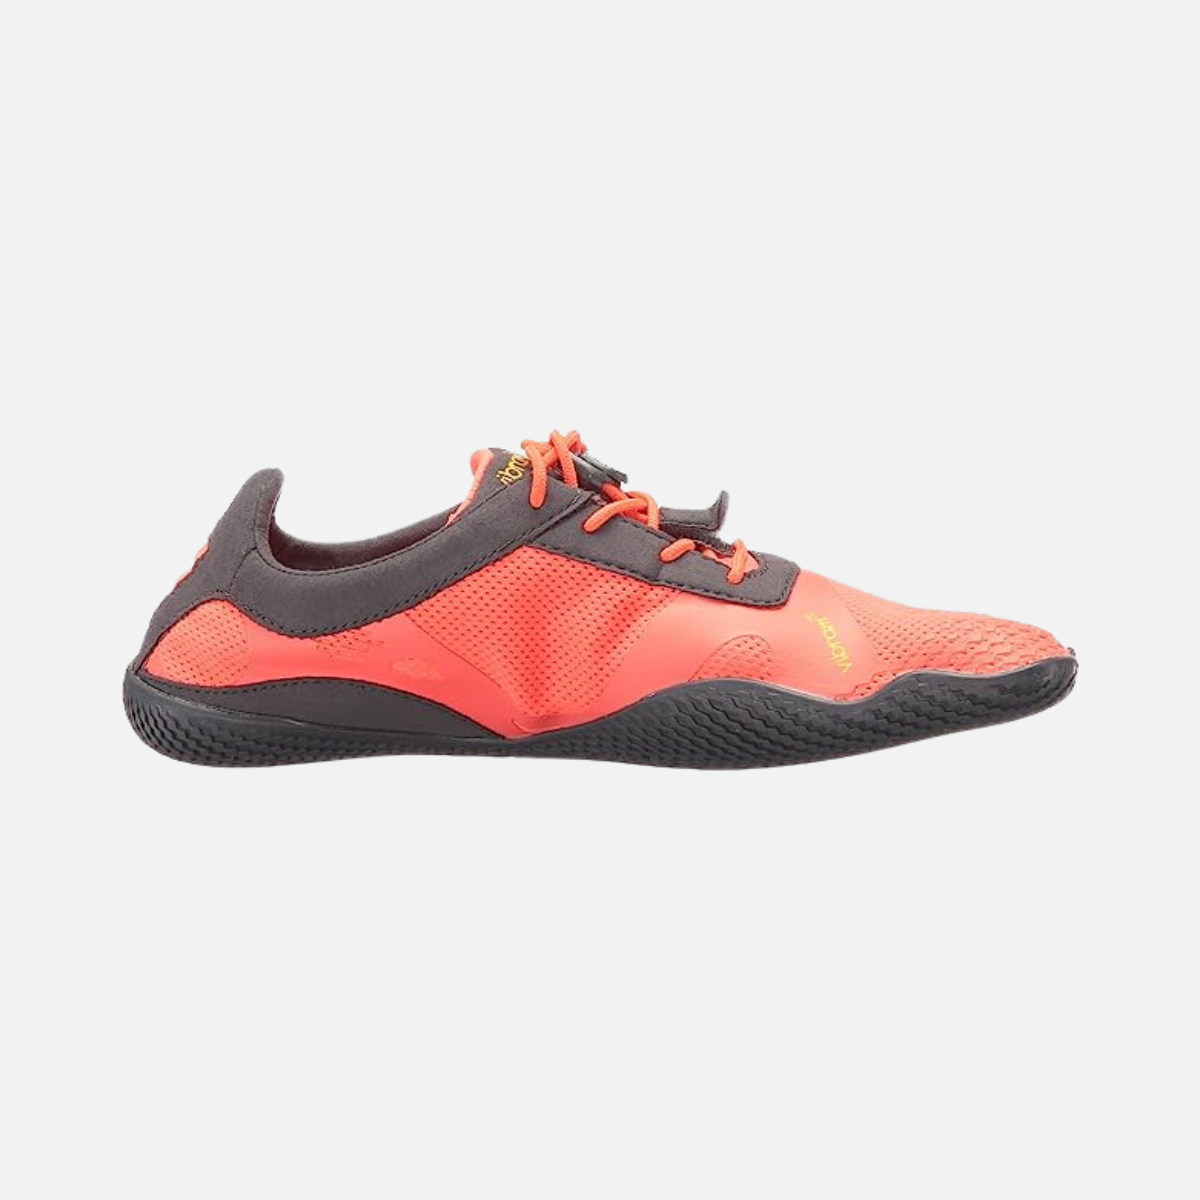 Vibram KSO EVO Women's Barefoot Training Shoes - Orange